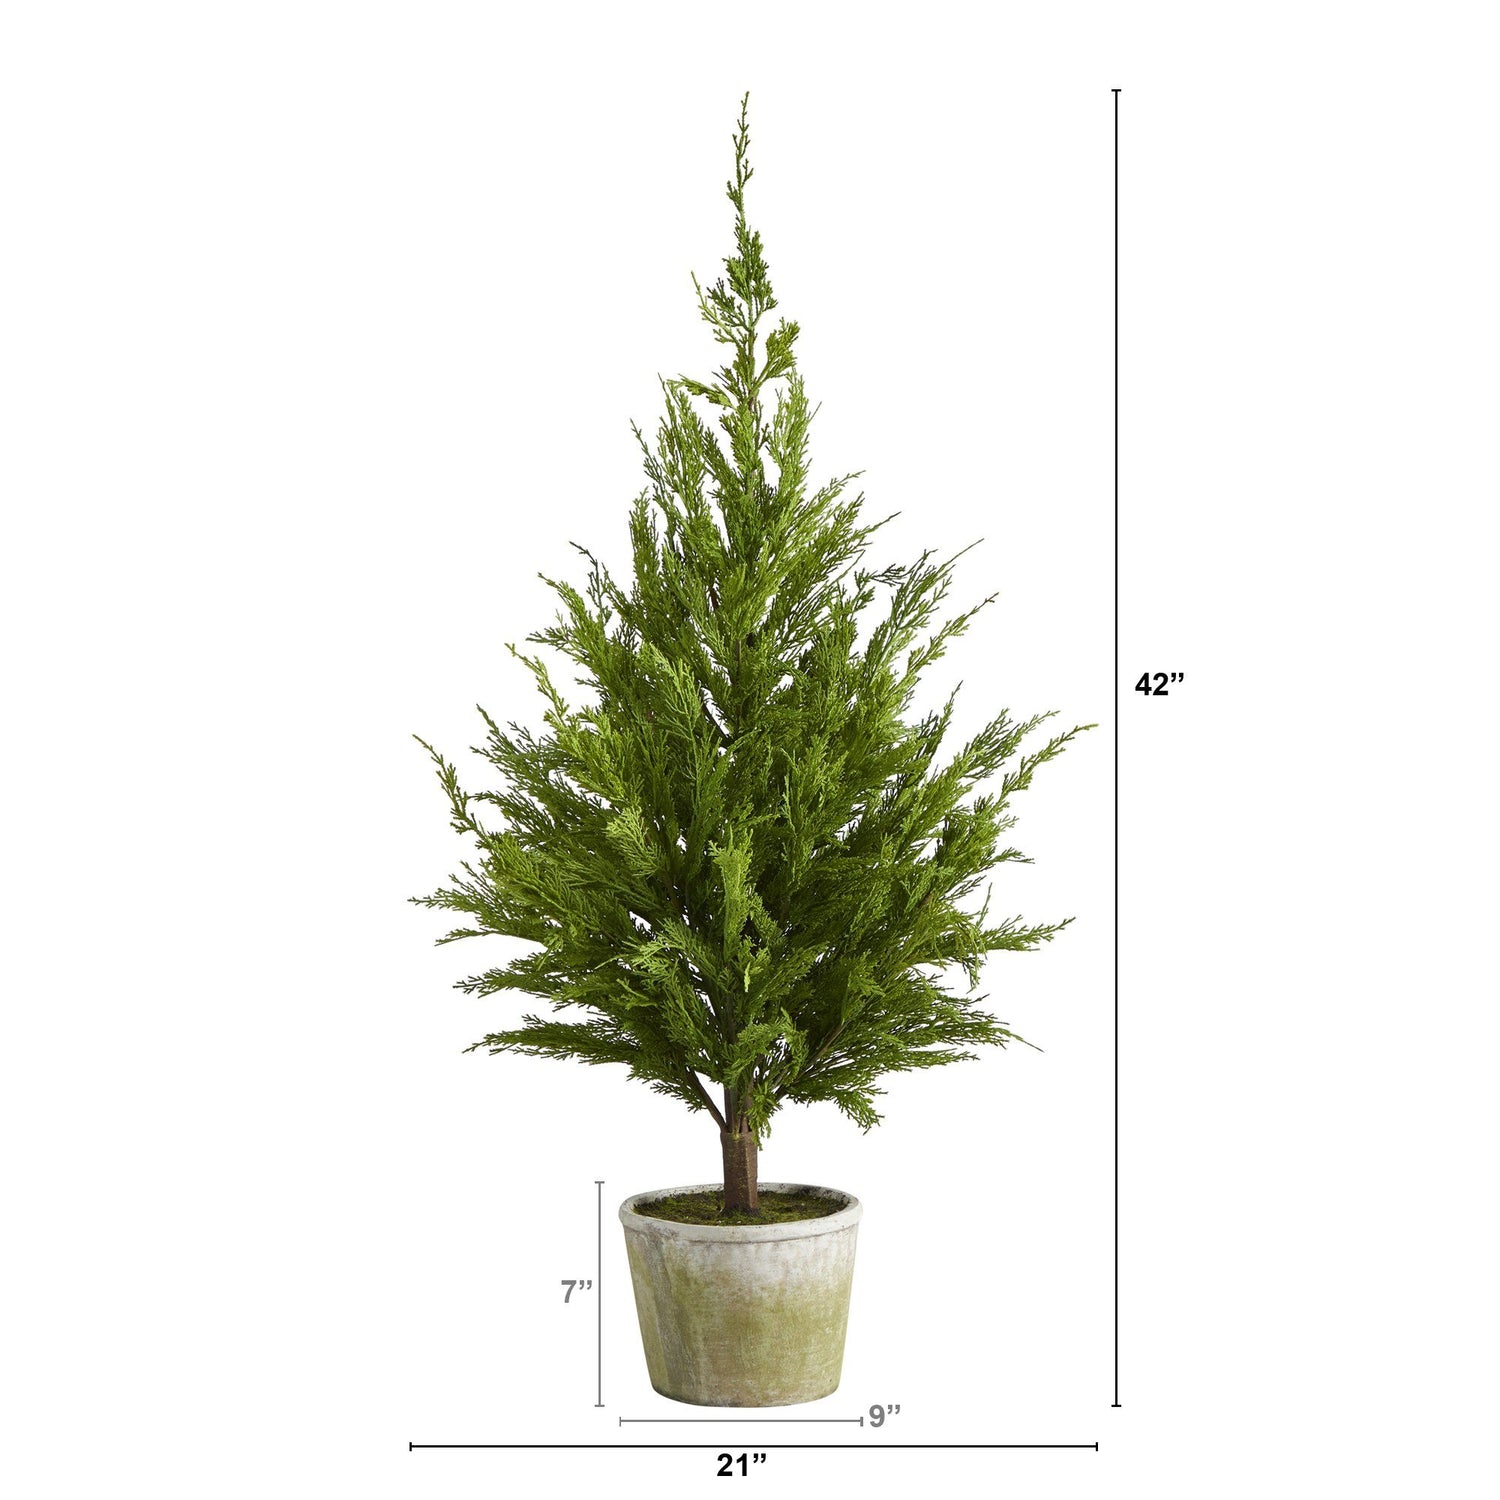 3.5’ Cedar Pine “Natural Look” Artificial Tree in Decorative Planter